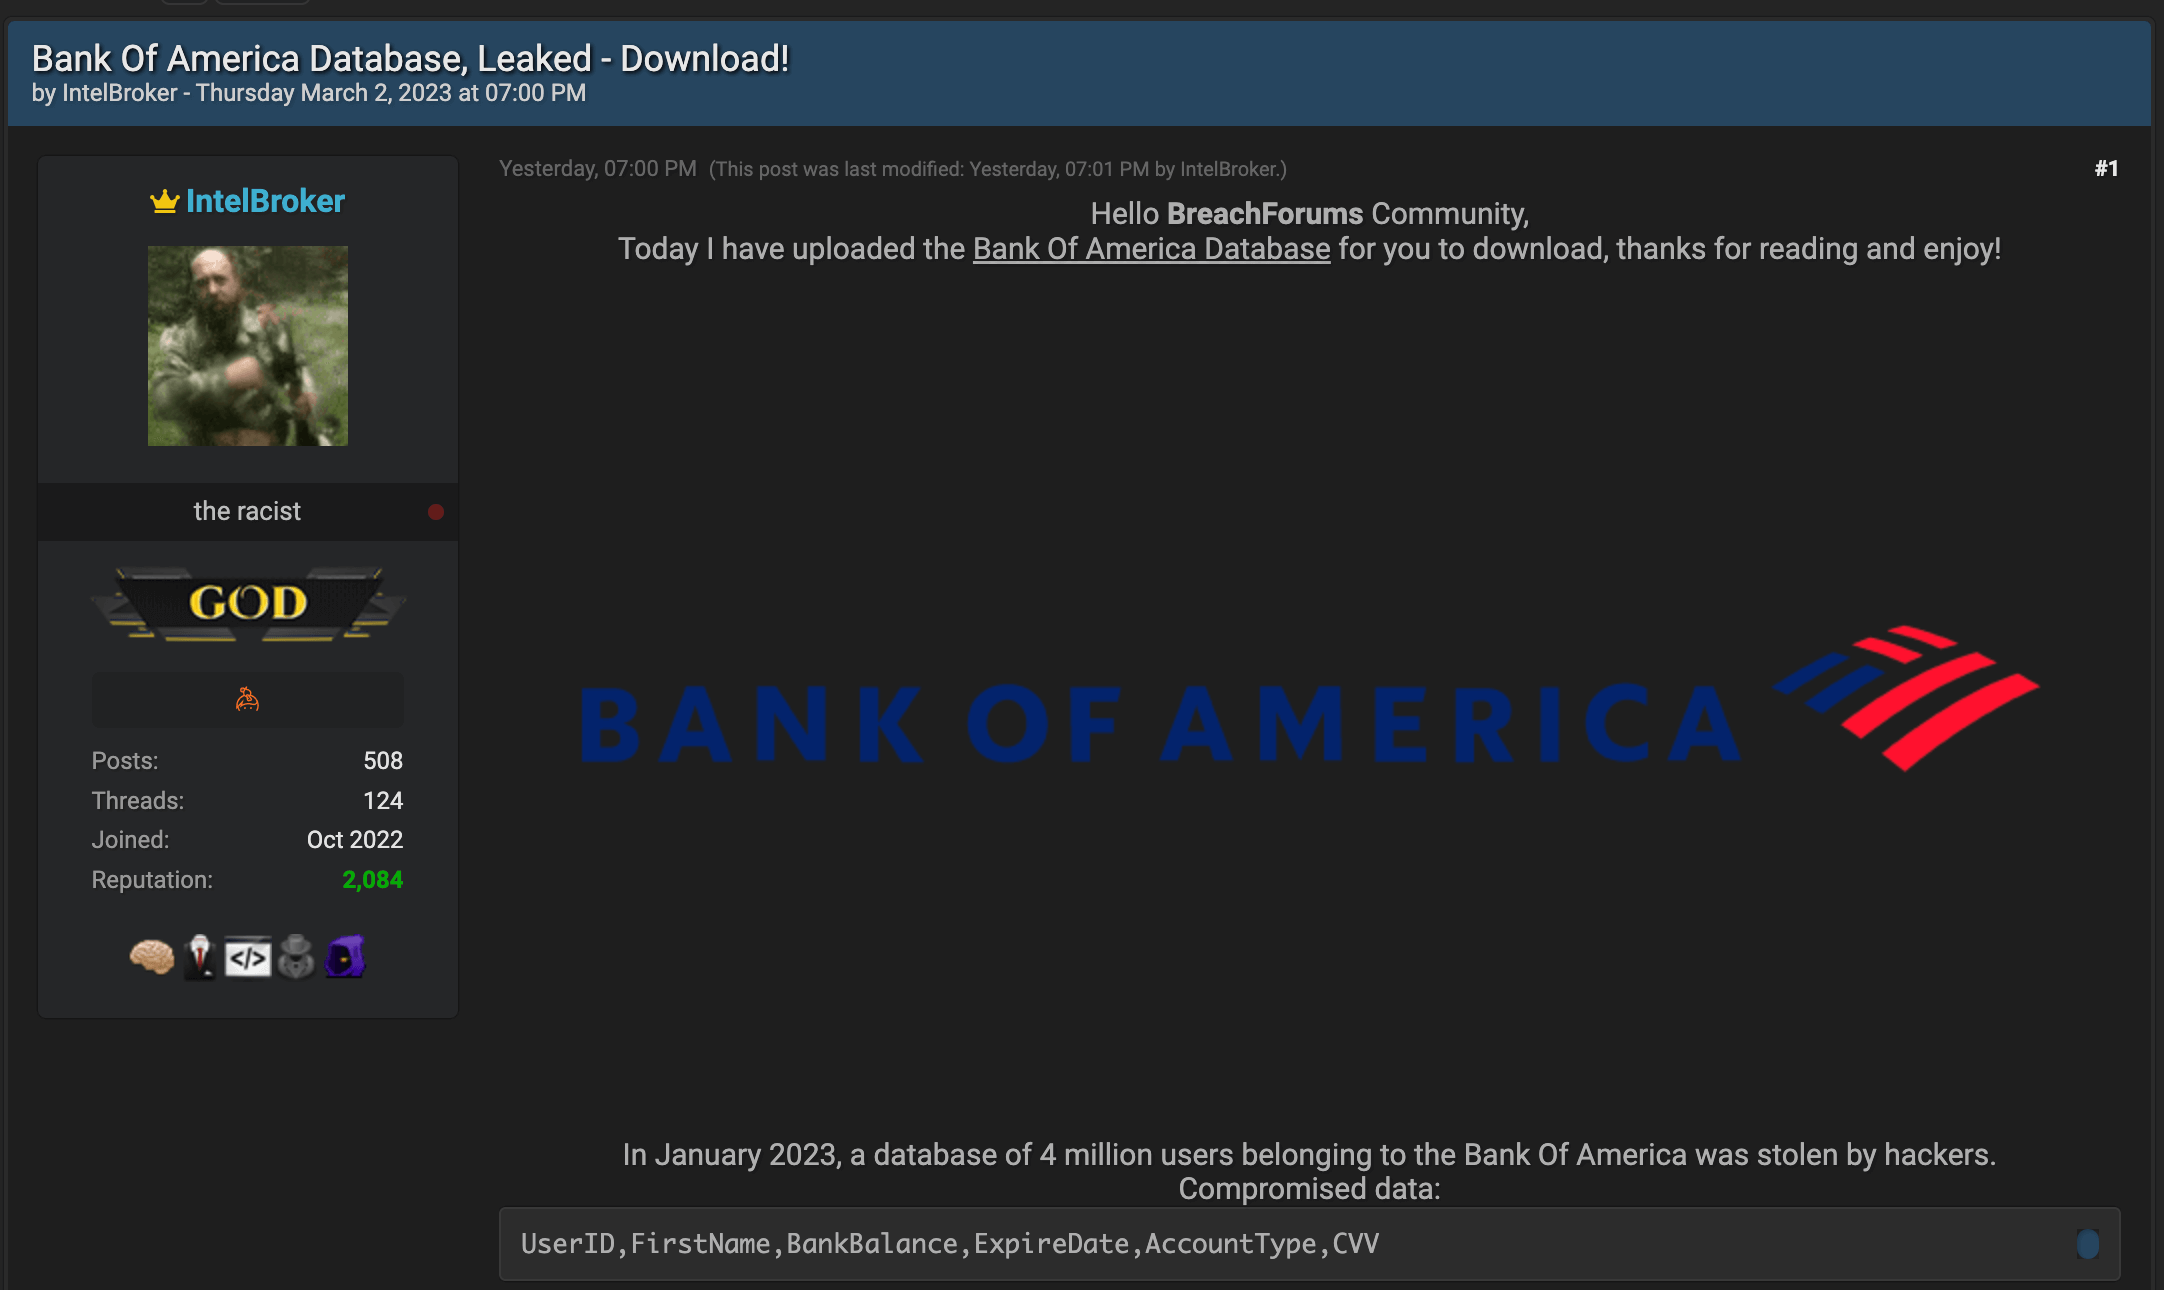 Bank of America Data Breach